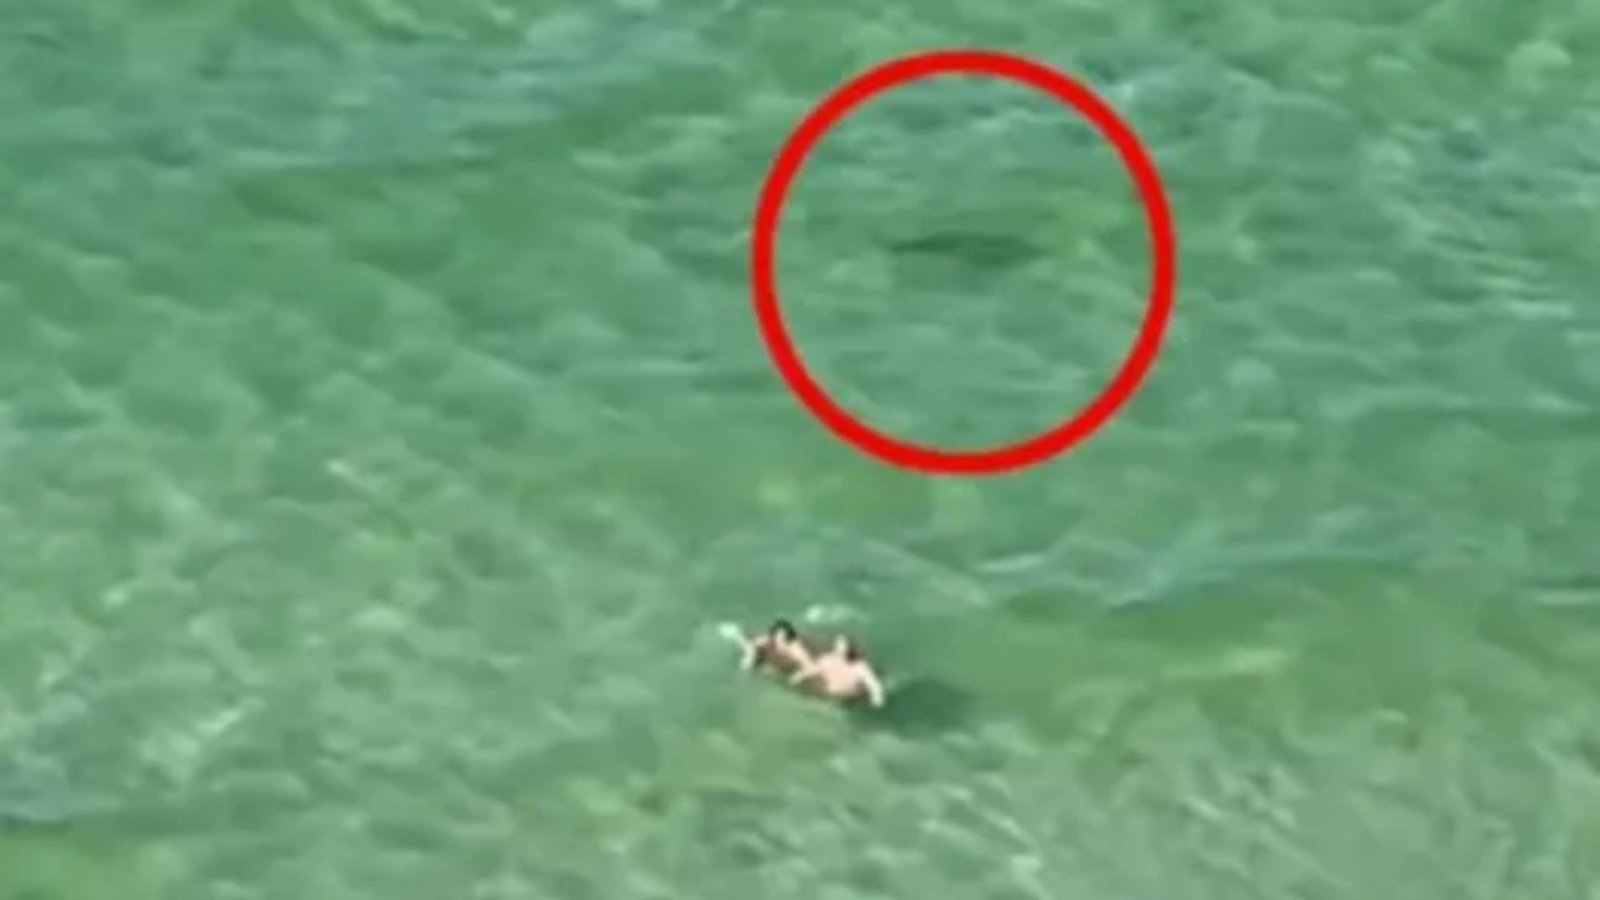 Horror moment tourists scream ‘SHARK’ at clueless swimmers as predator circles them off Florida beach